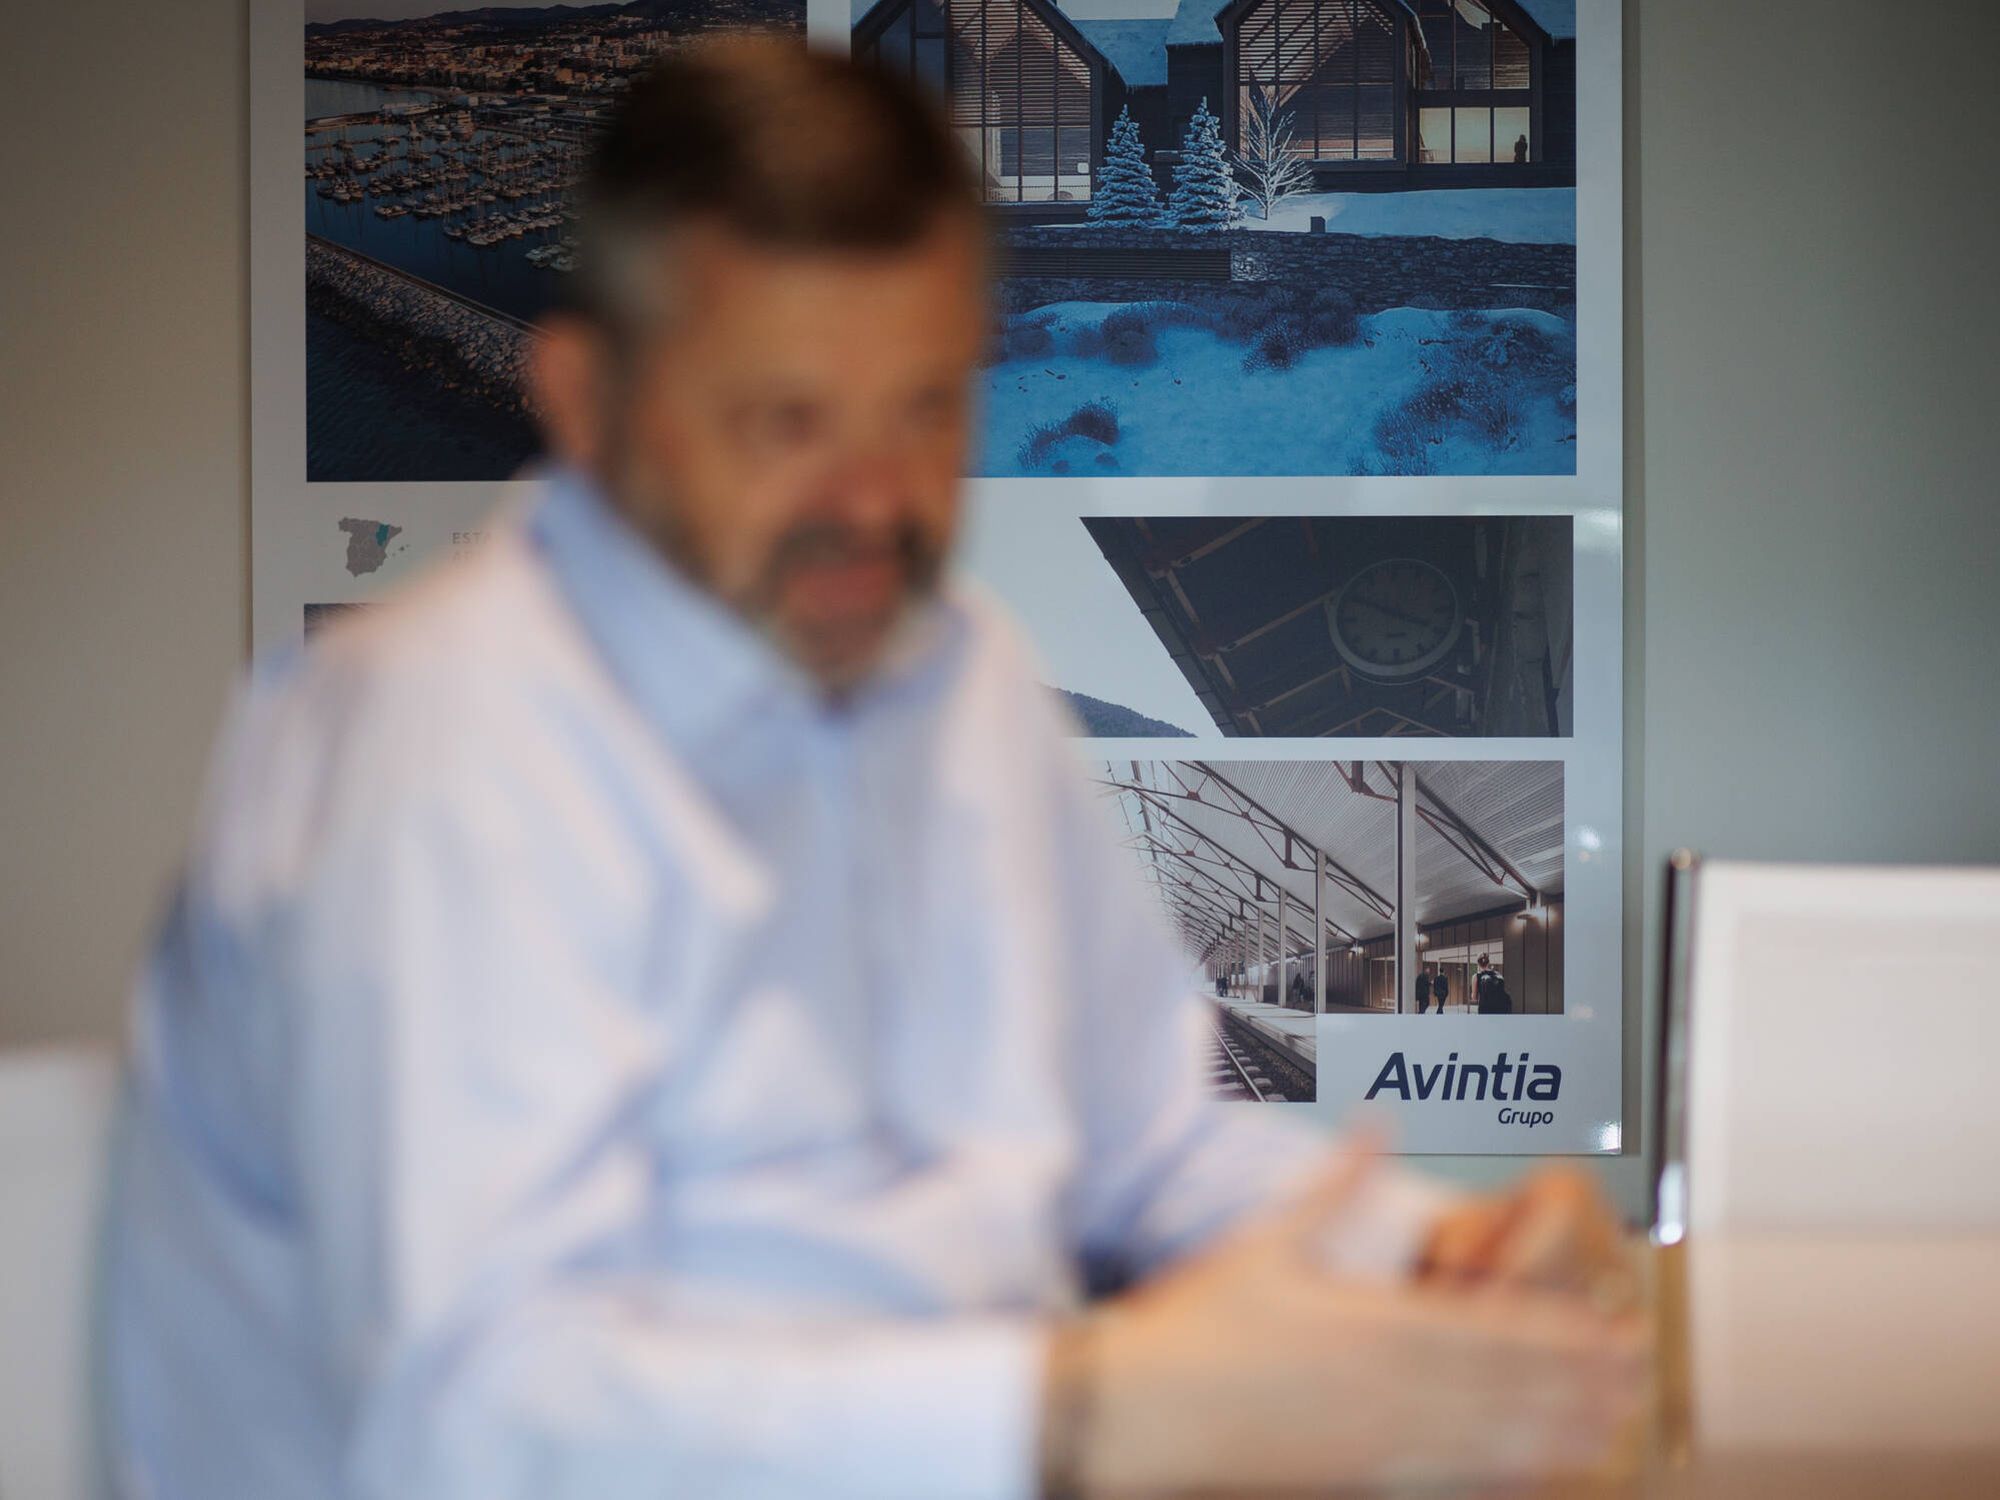 Avintia tiene 5.000 viviendas en carga en la fábrica de Aranda. (A. M. V.)